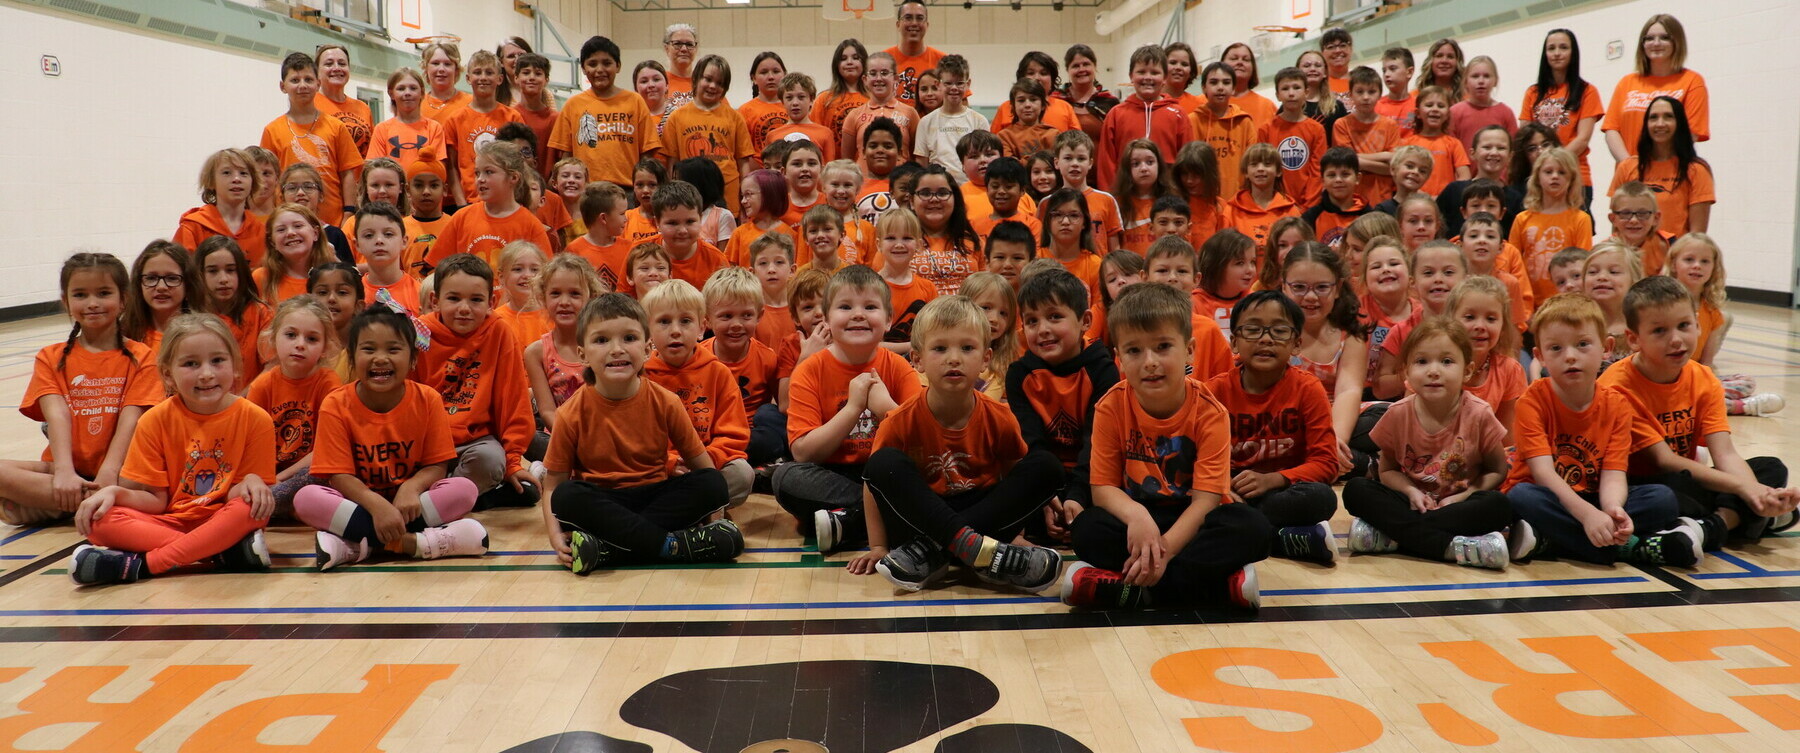 Students wearing their orange shirts